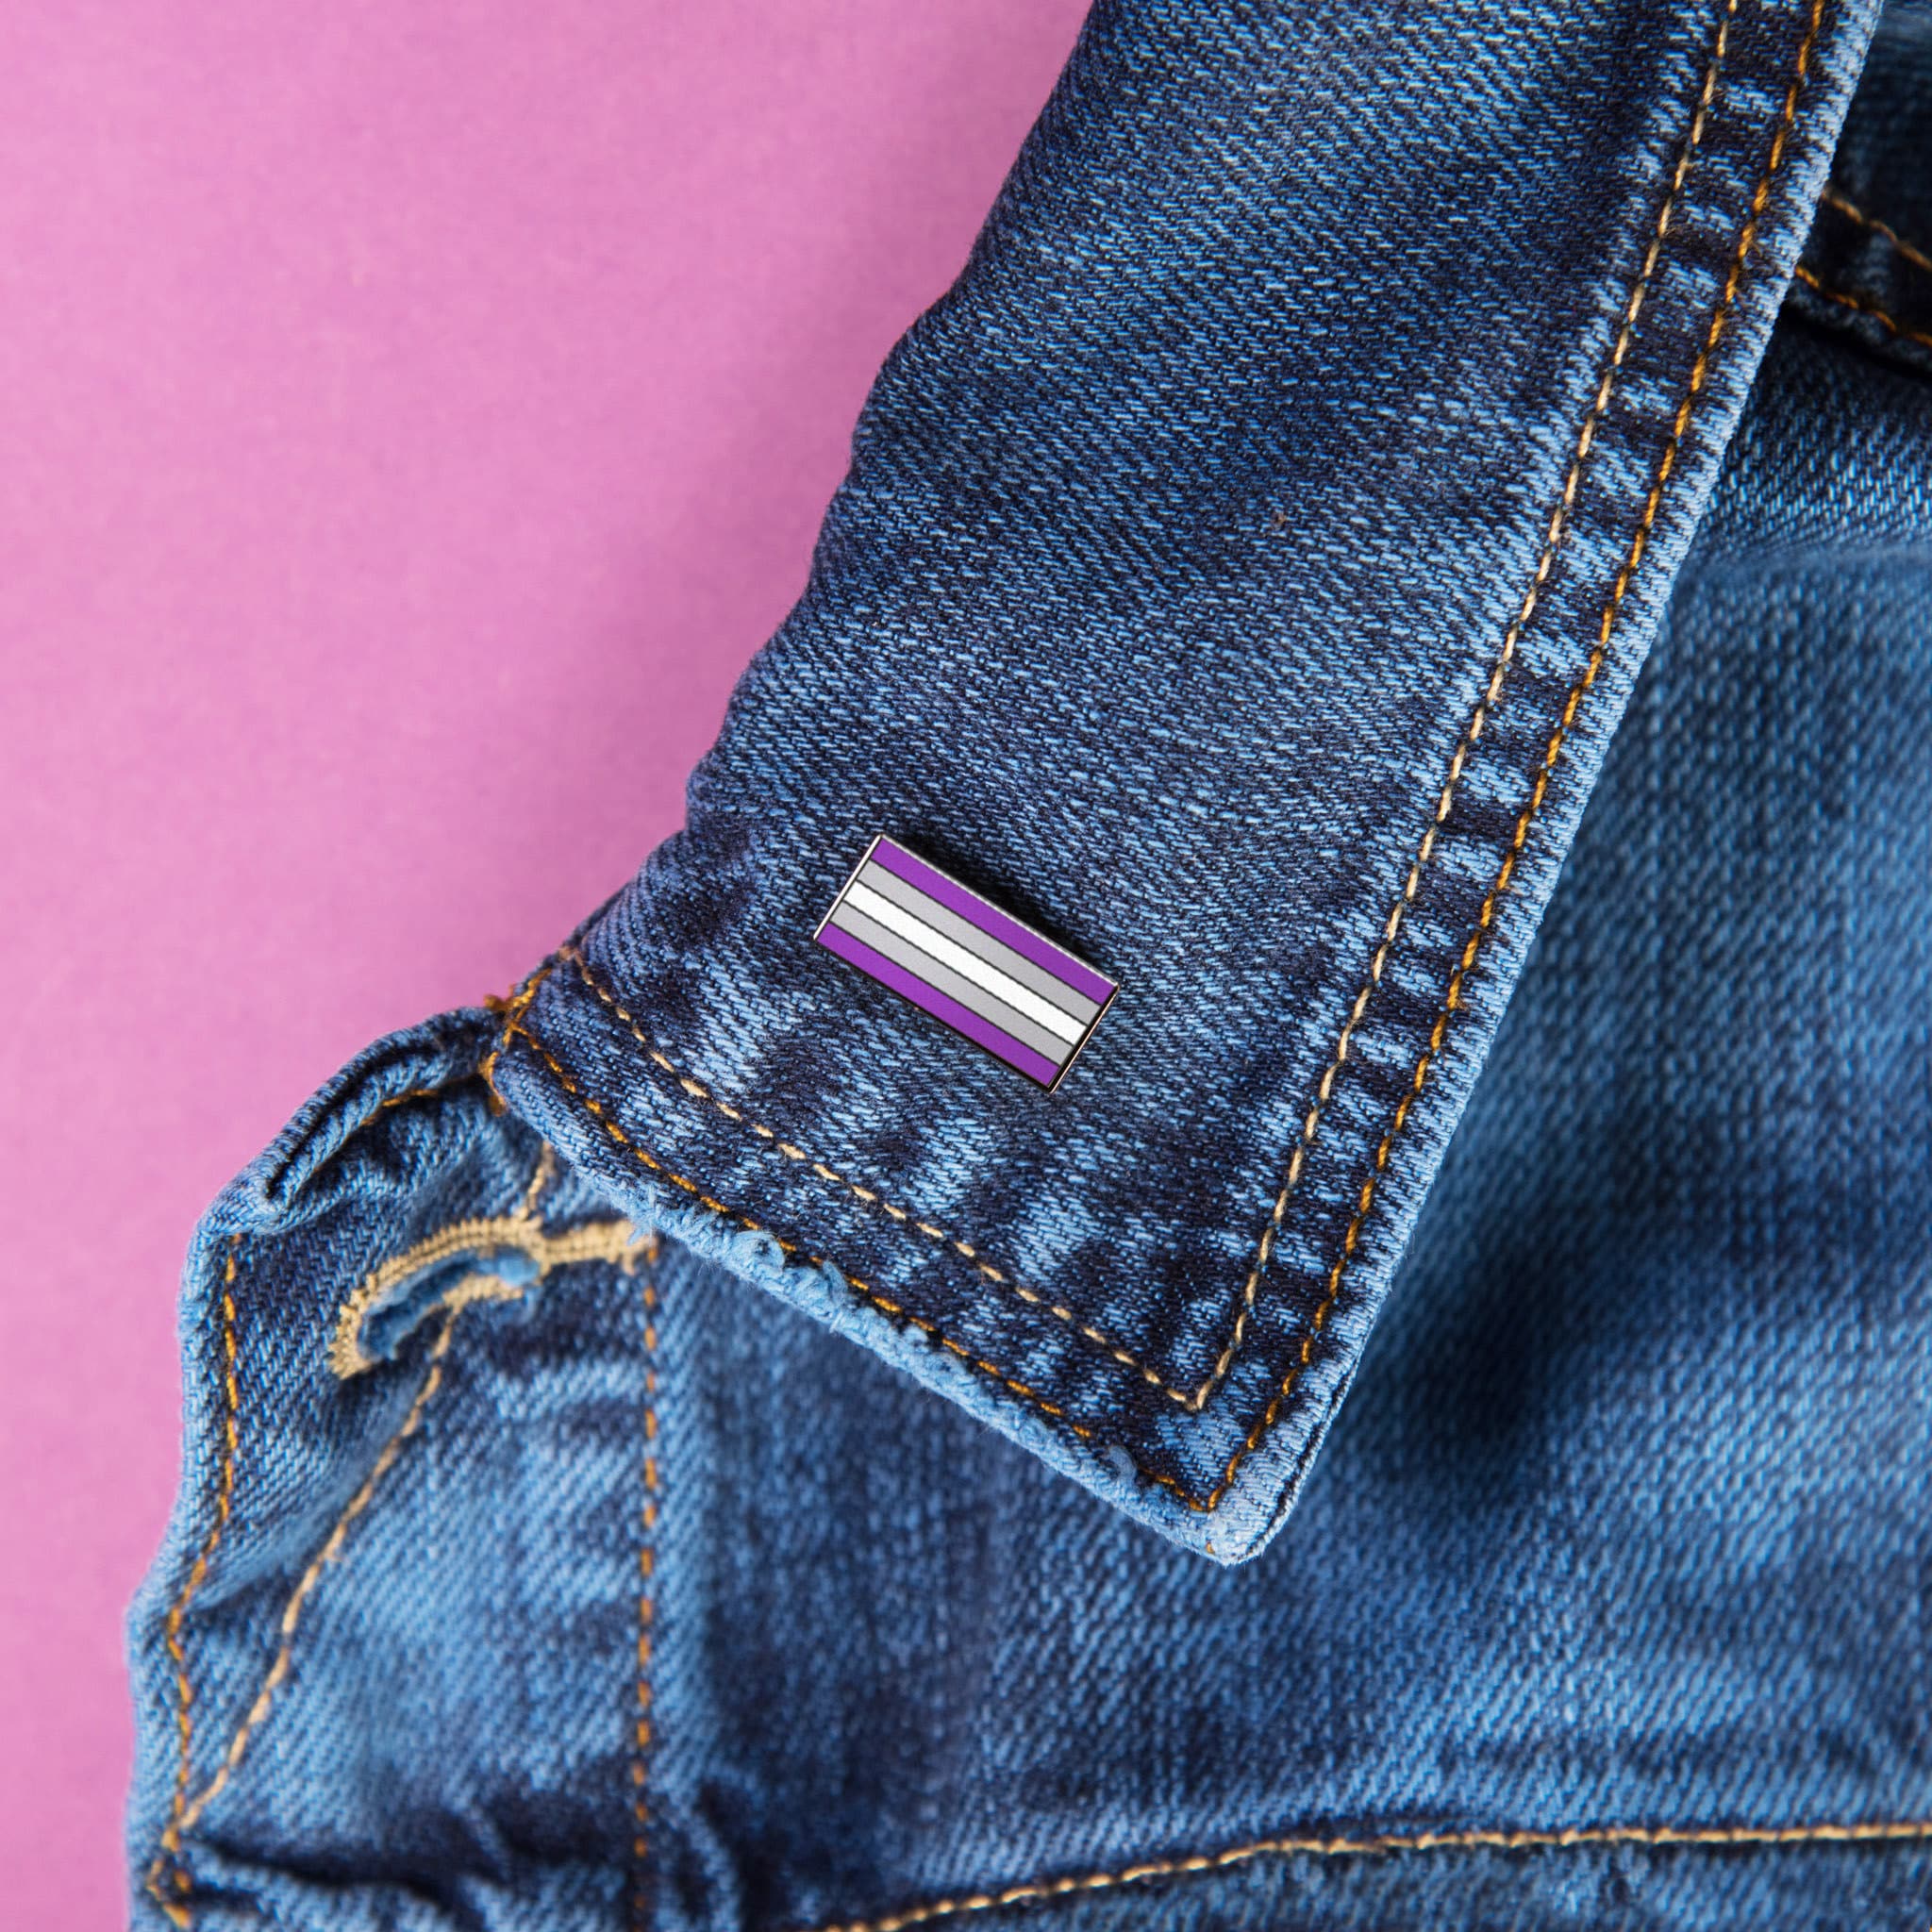 Greysexual Pride Flag Badge Asexual Aroace Pin